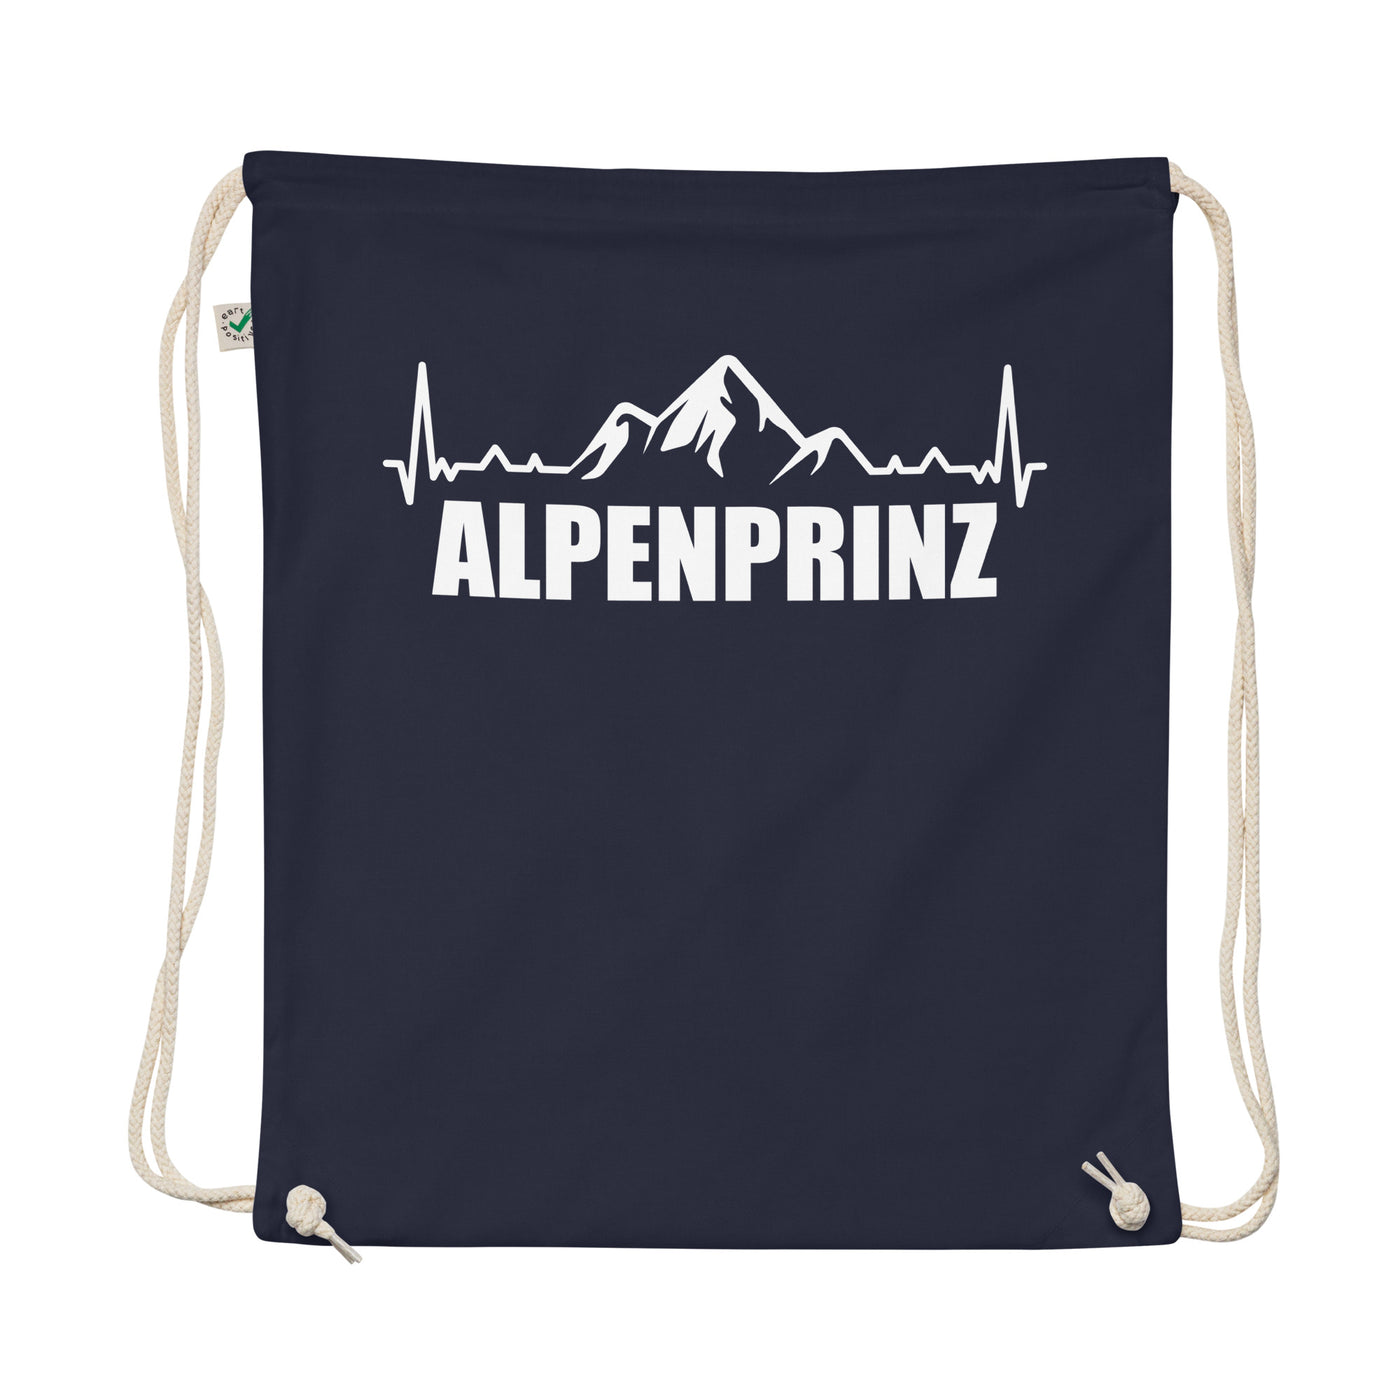 Alpenprinz 1 - Organic Turnbeutel berge